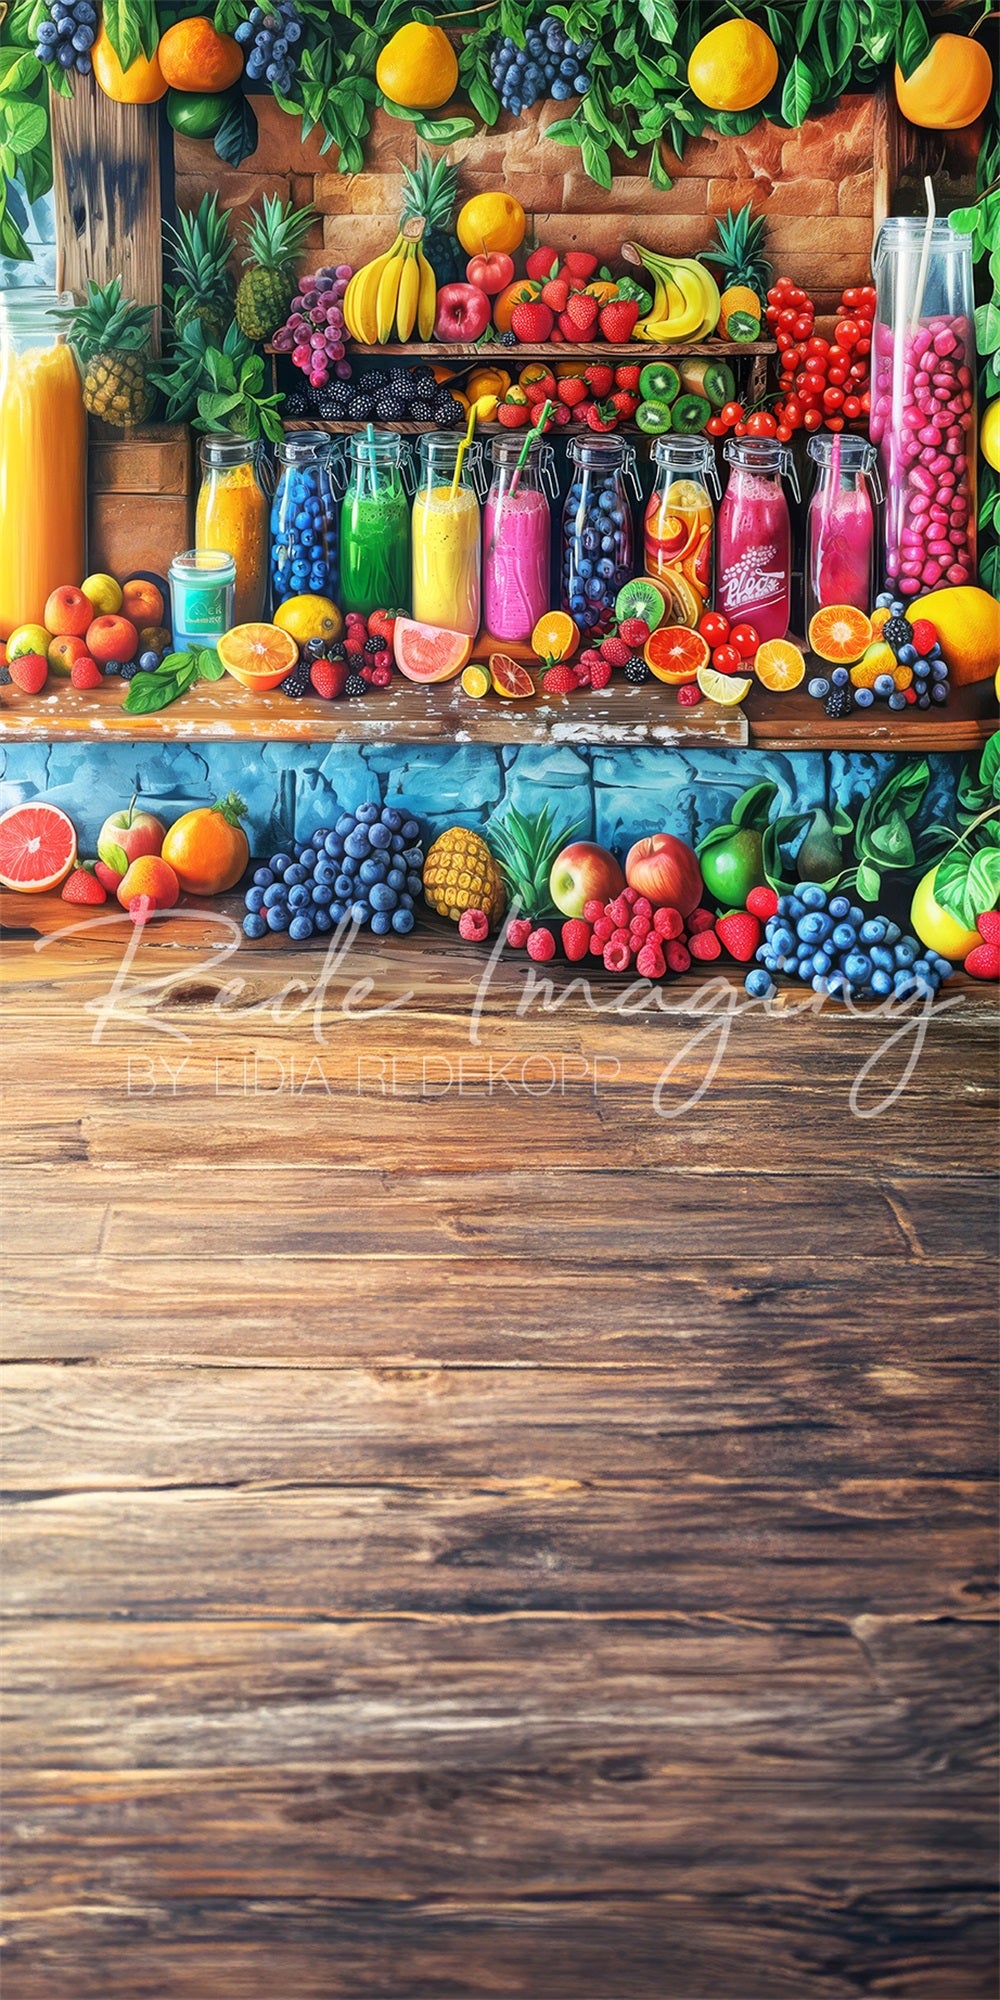 Kate Sweep Summer Colorful Fruit Shop Backdrop Designed by Lidia Redekopp